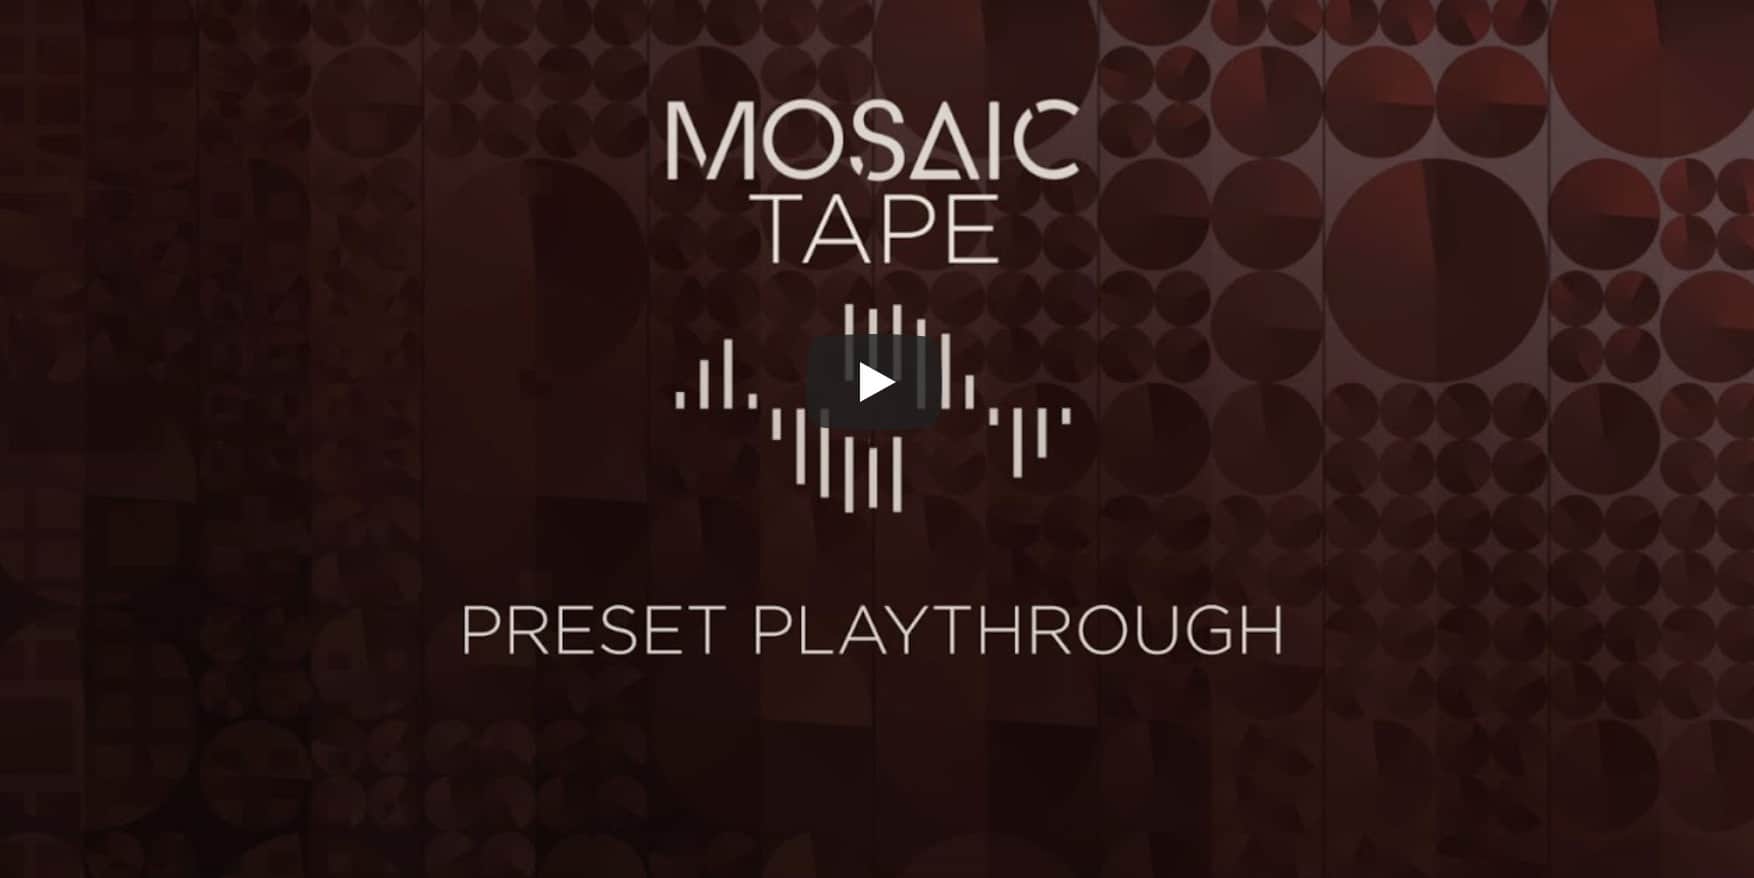 Mosaic Tape - Preset Playthrough | Heavyocity